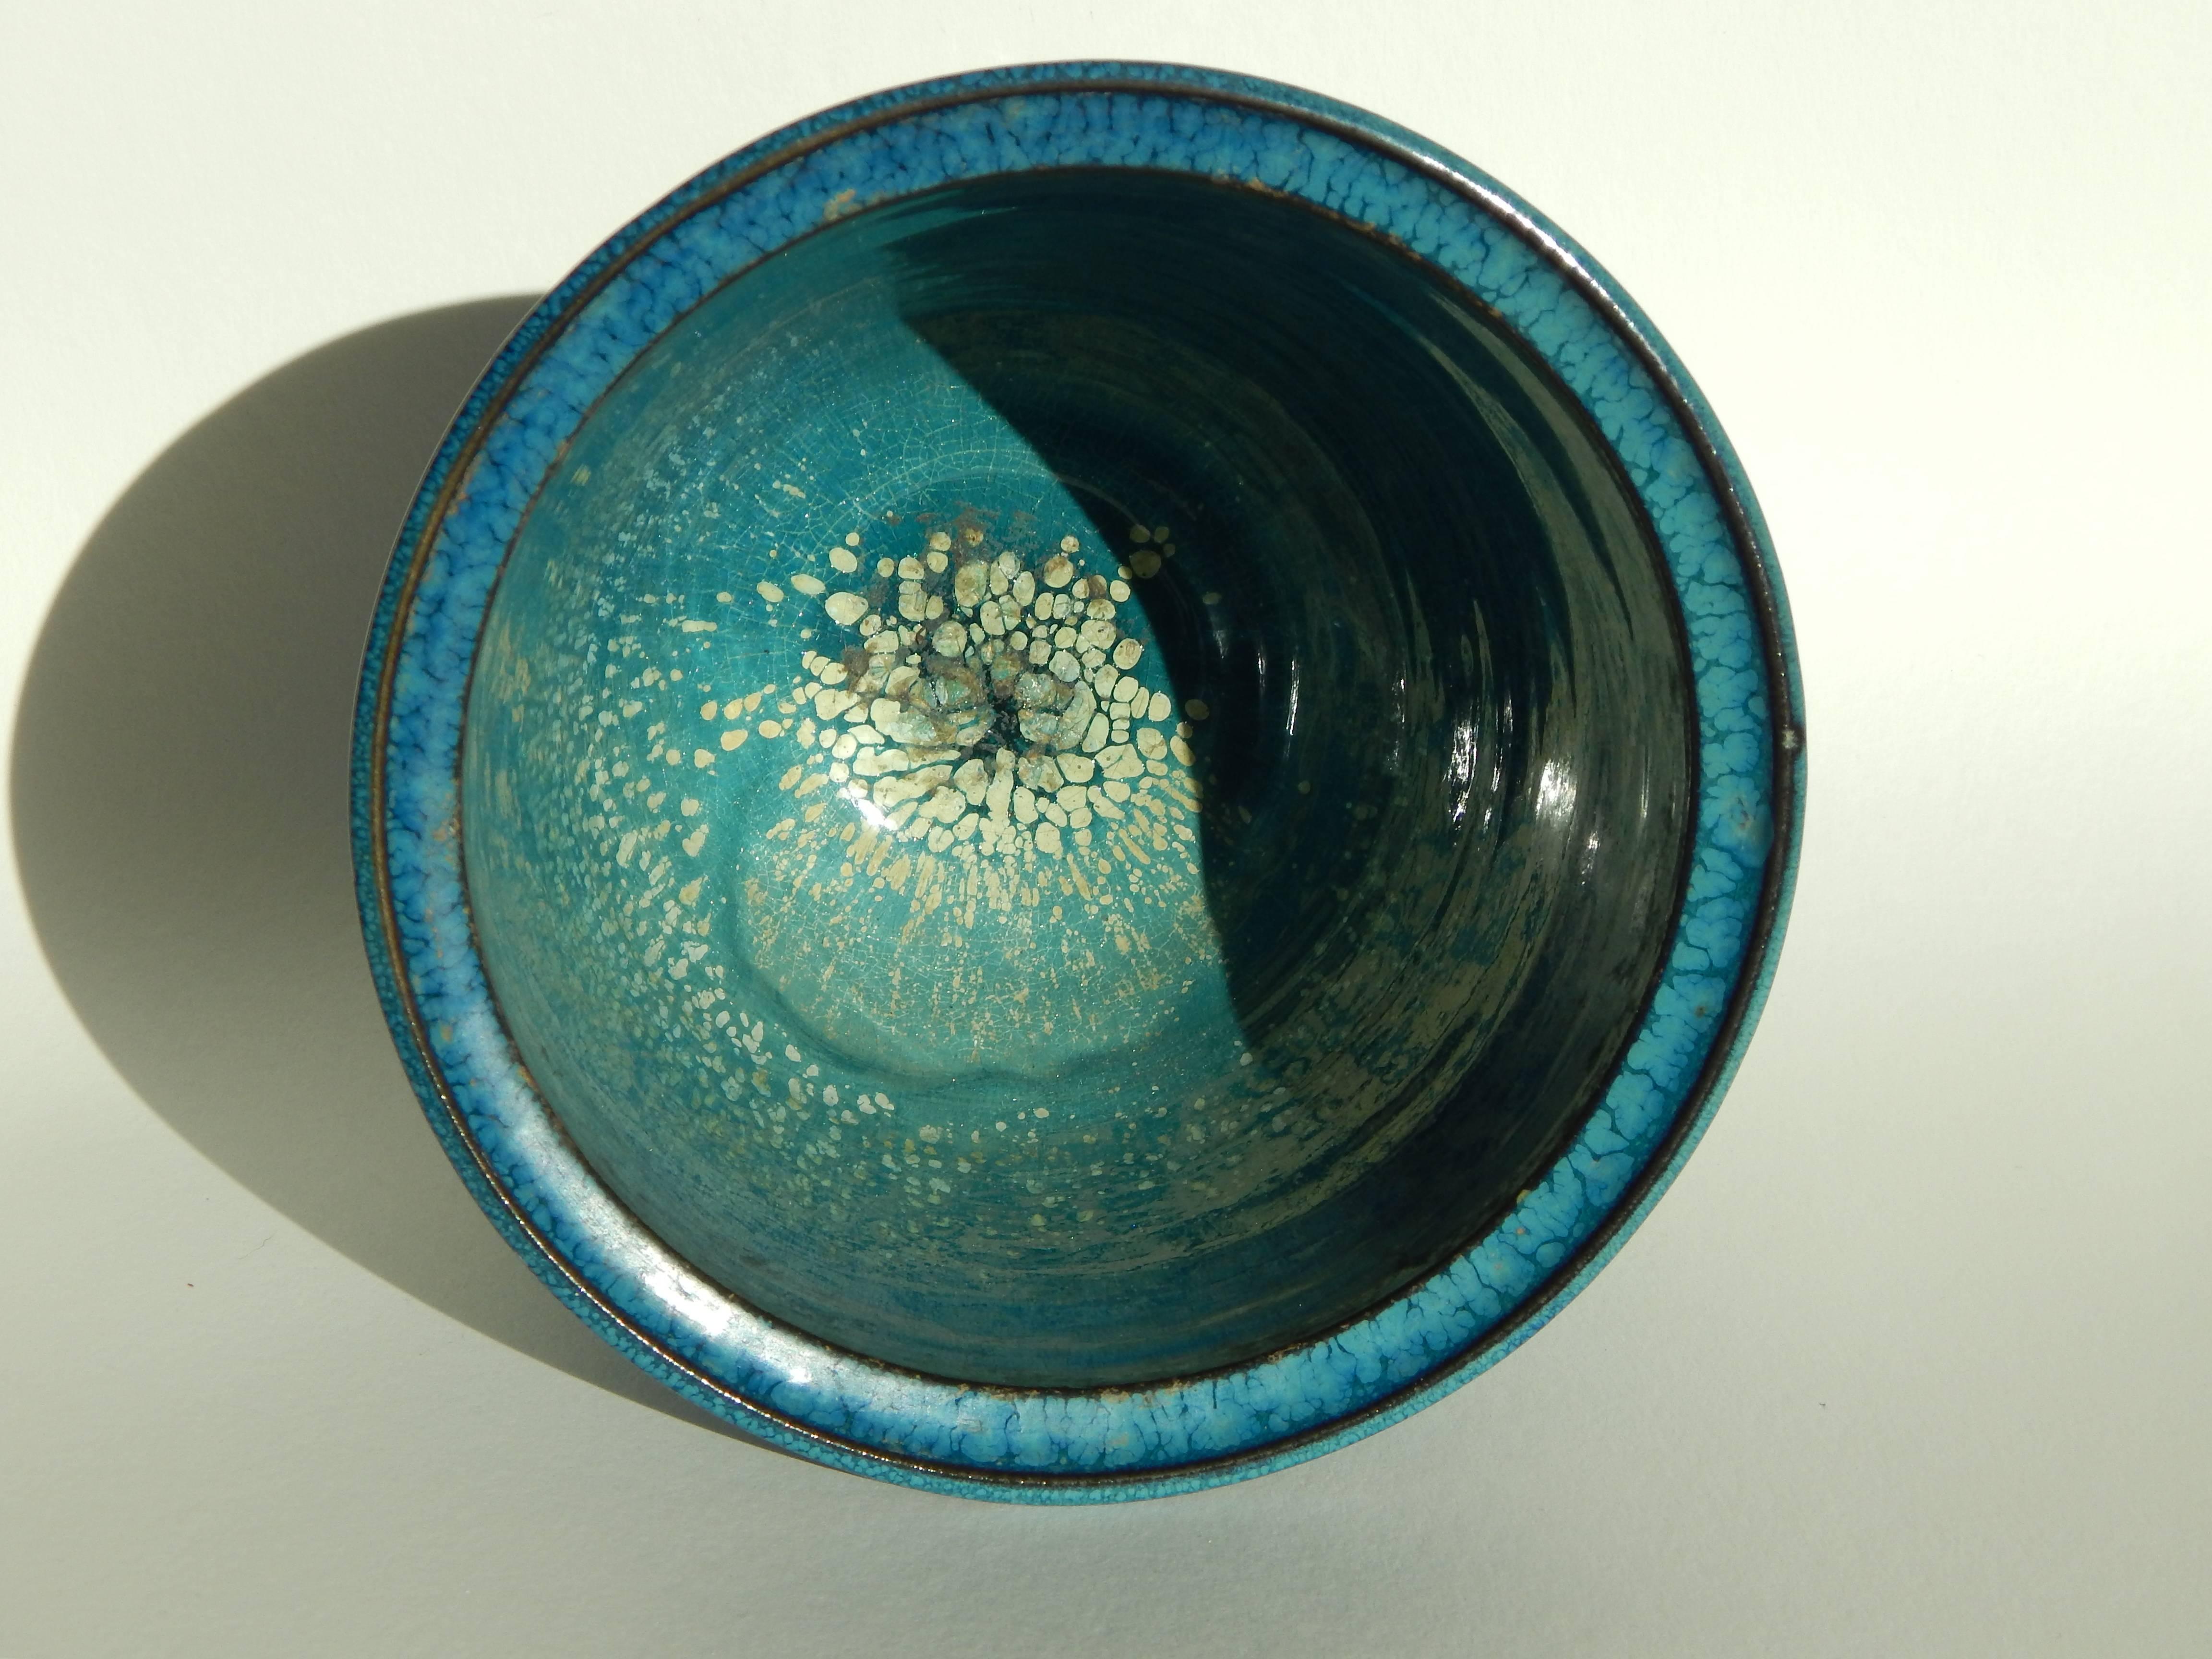 Ken Shores (b. 1928-2014) Portland Studio Potter
Blue ceramic vase with impressed geometric design
Measures: 6.75